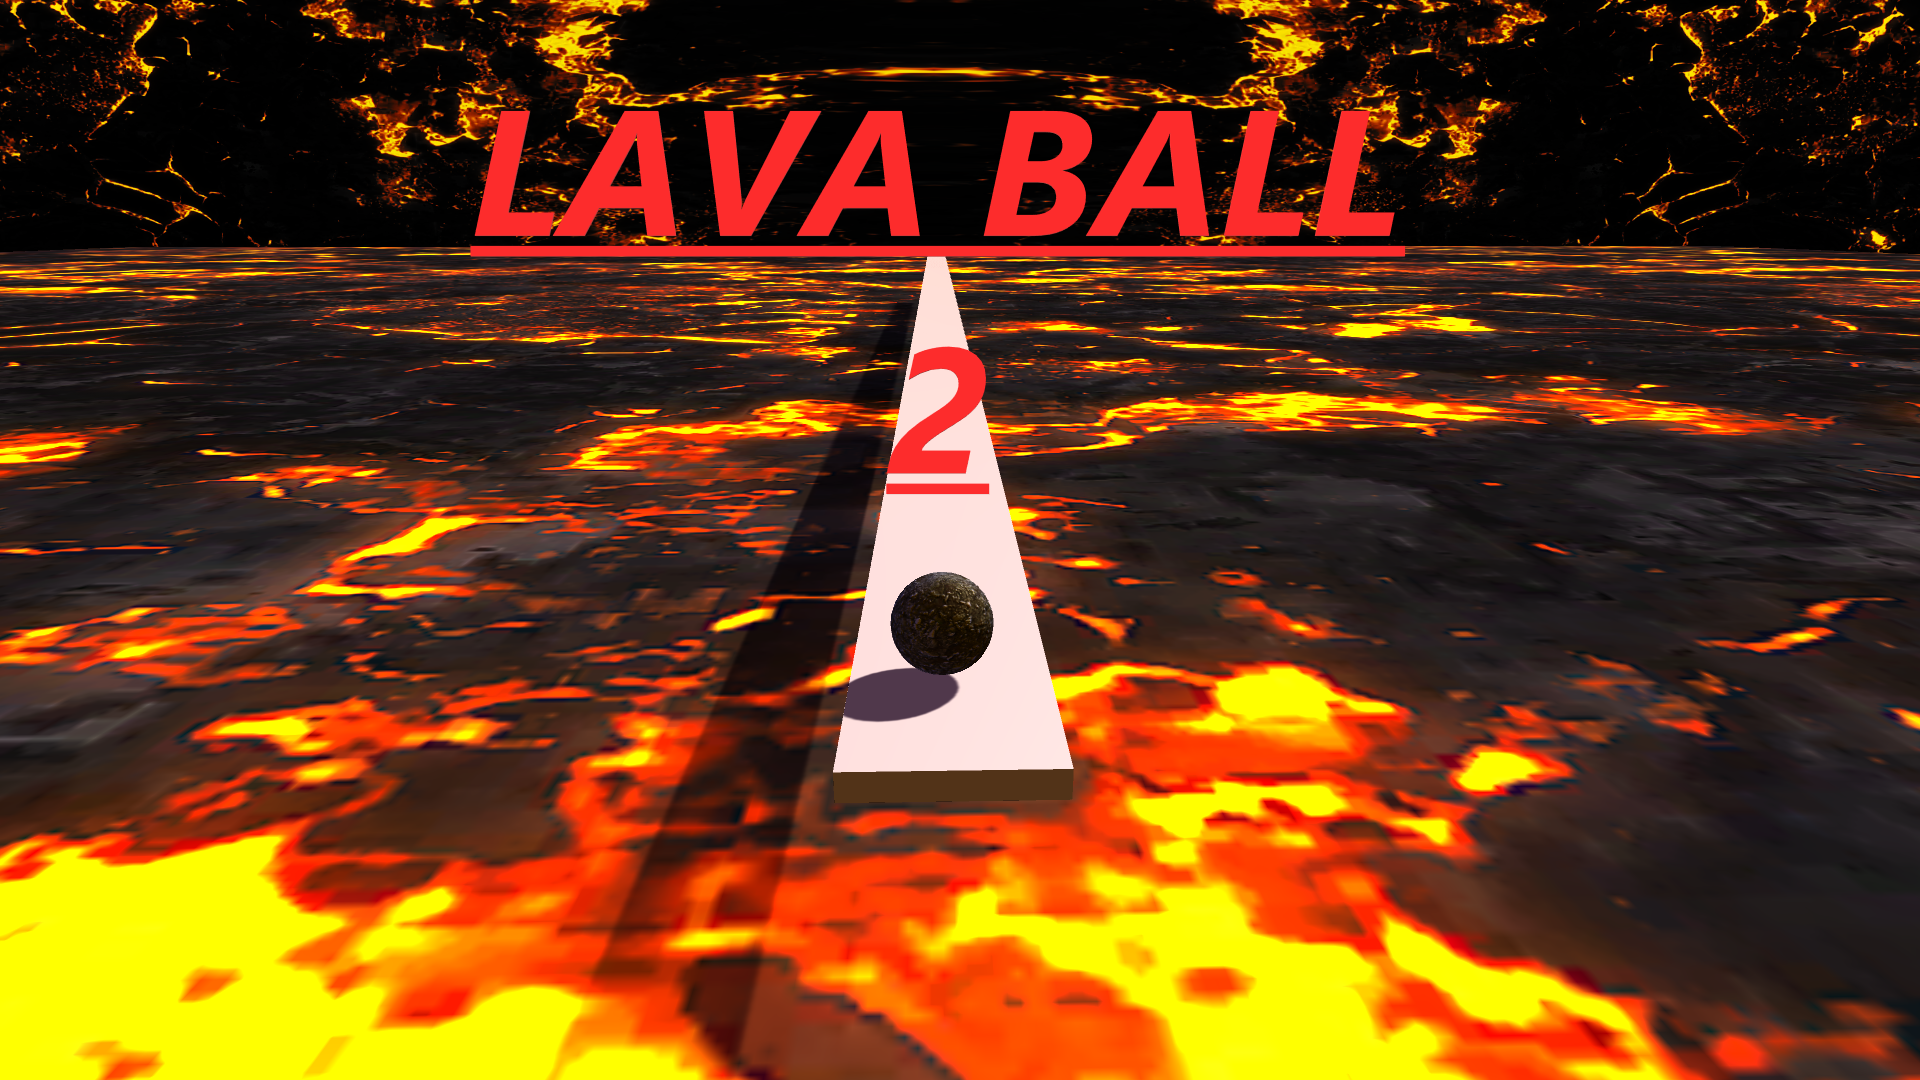 Lava Ball 2